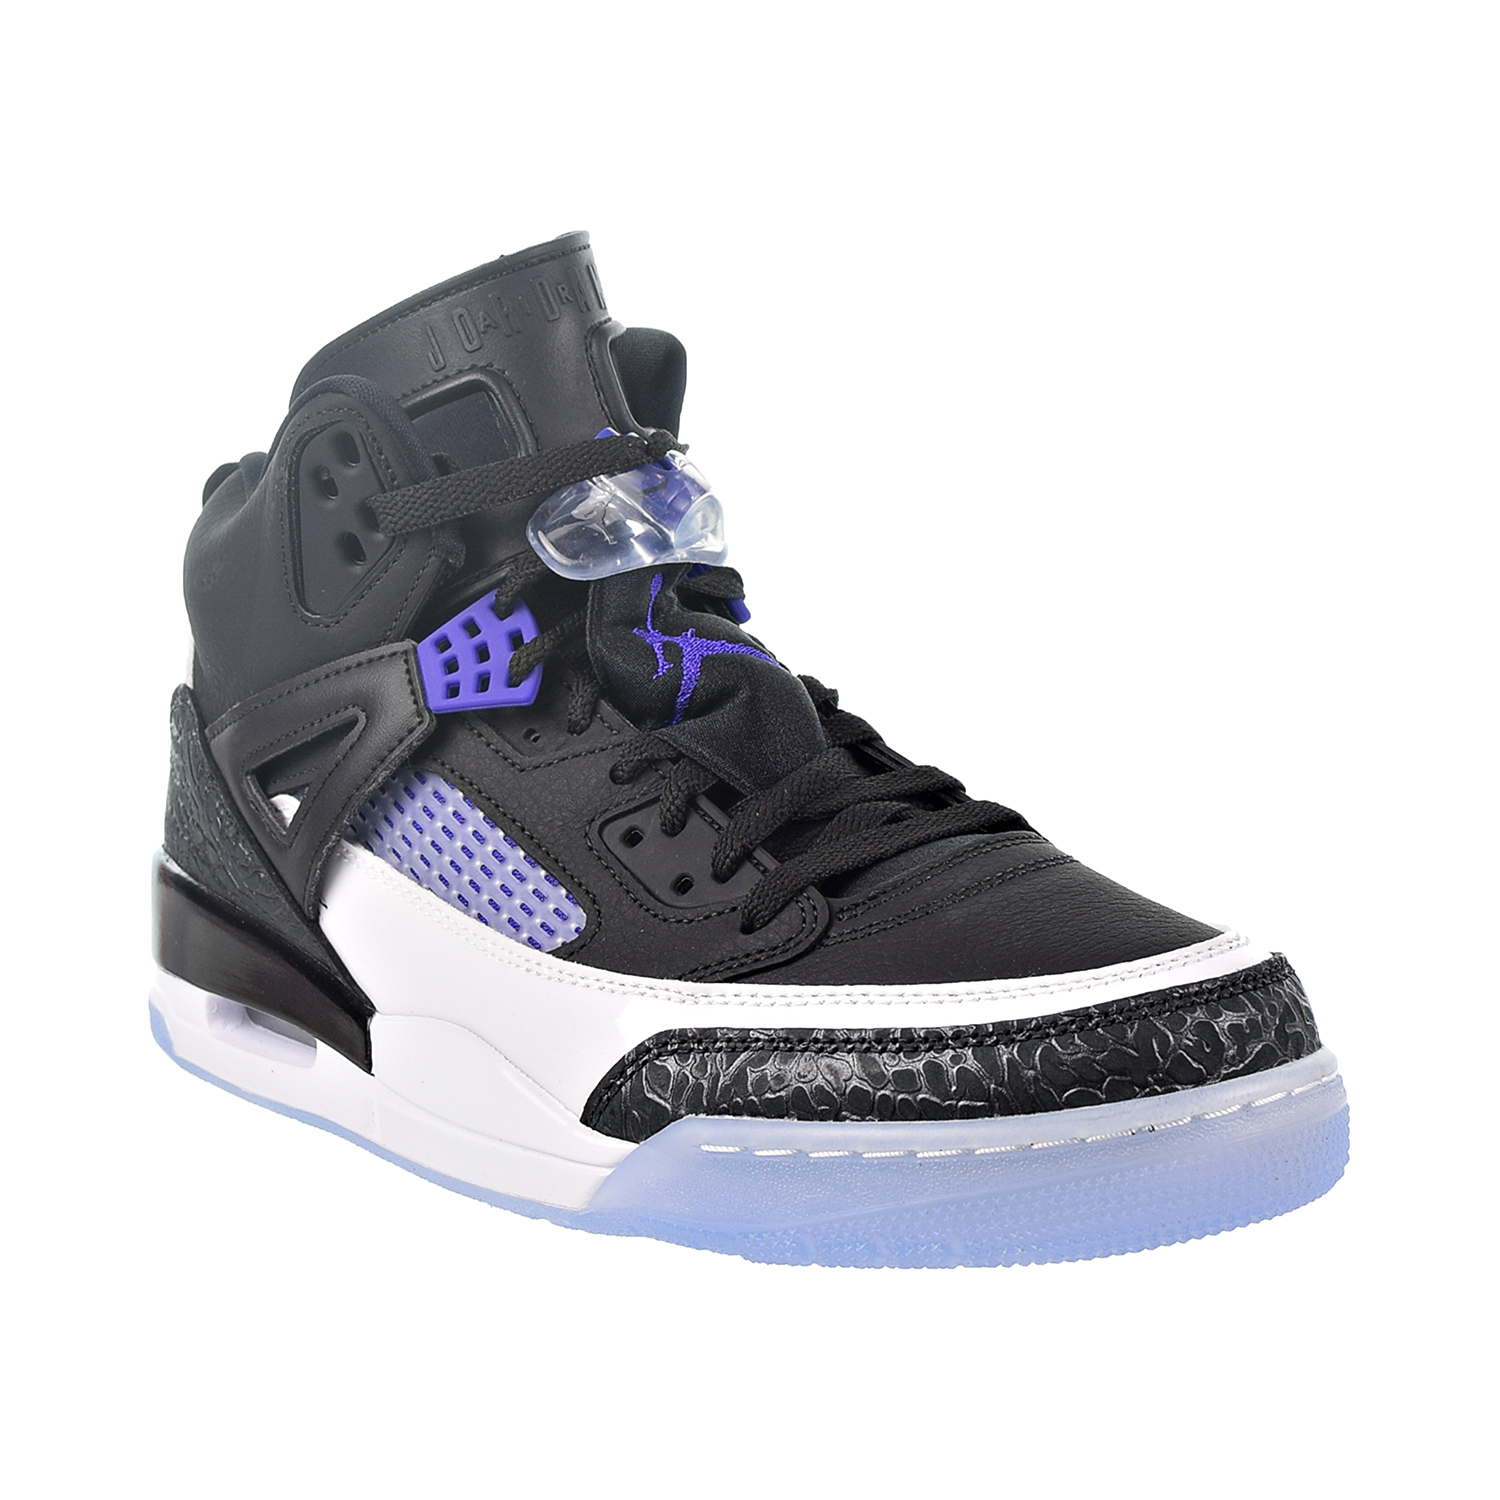 Nike Air Jordan Spizike Men's Shoes Black/Dark Concord/White 315371-005